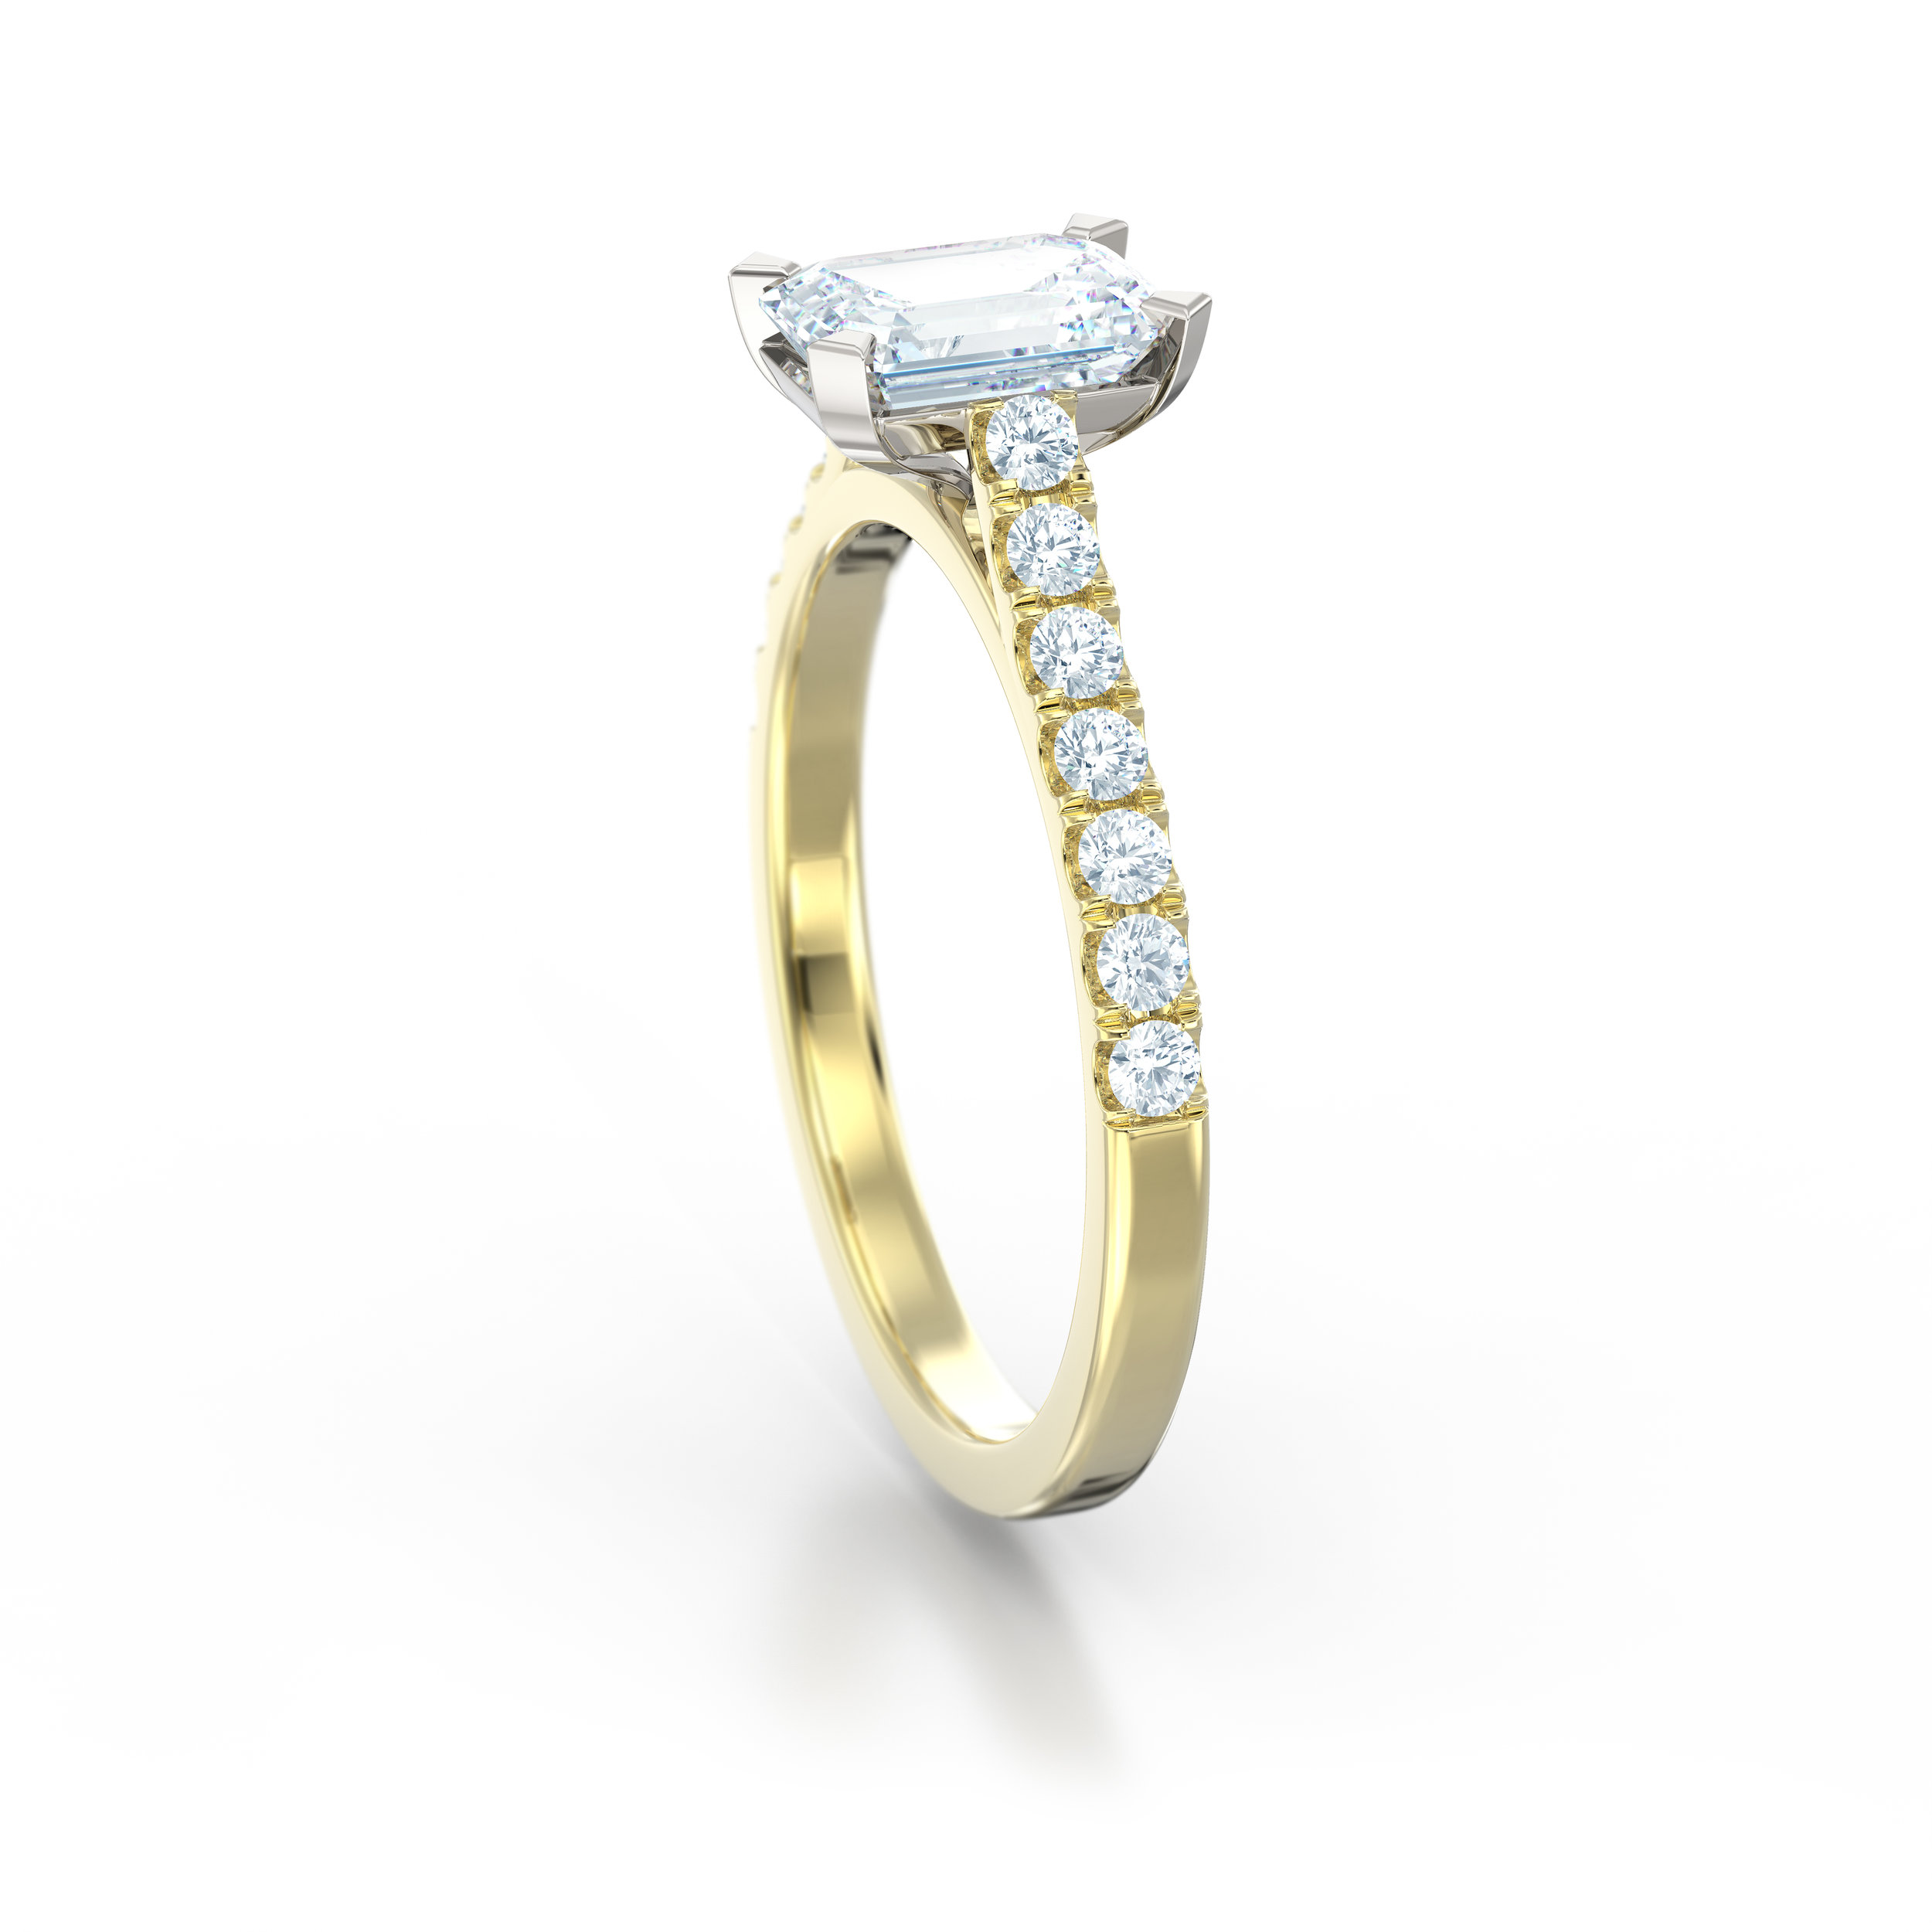 Emerald cut diamond shoulder engagement ring